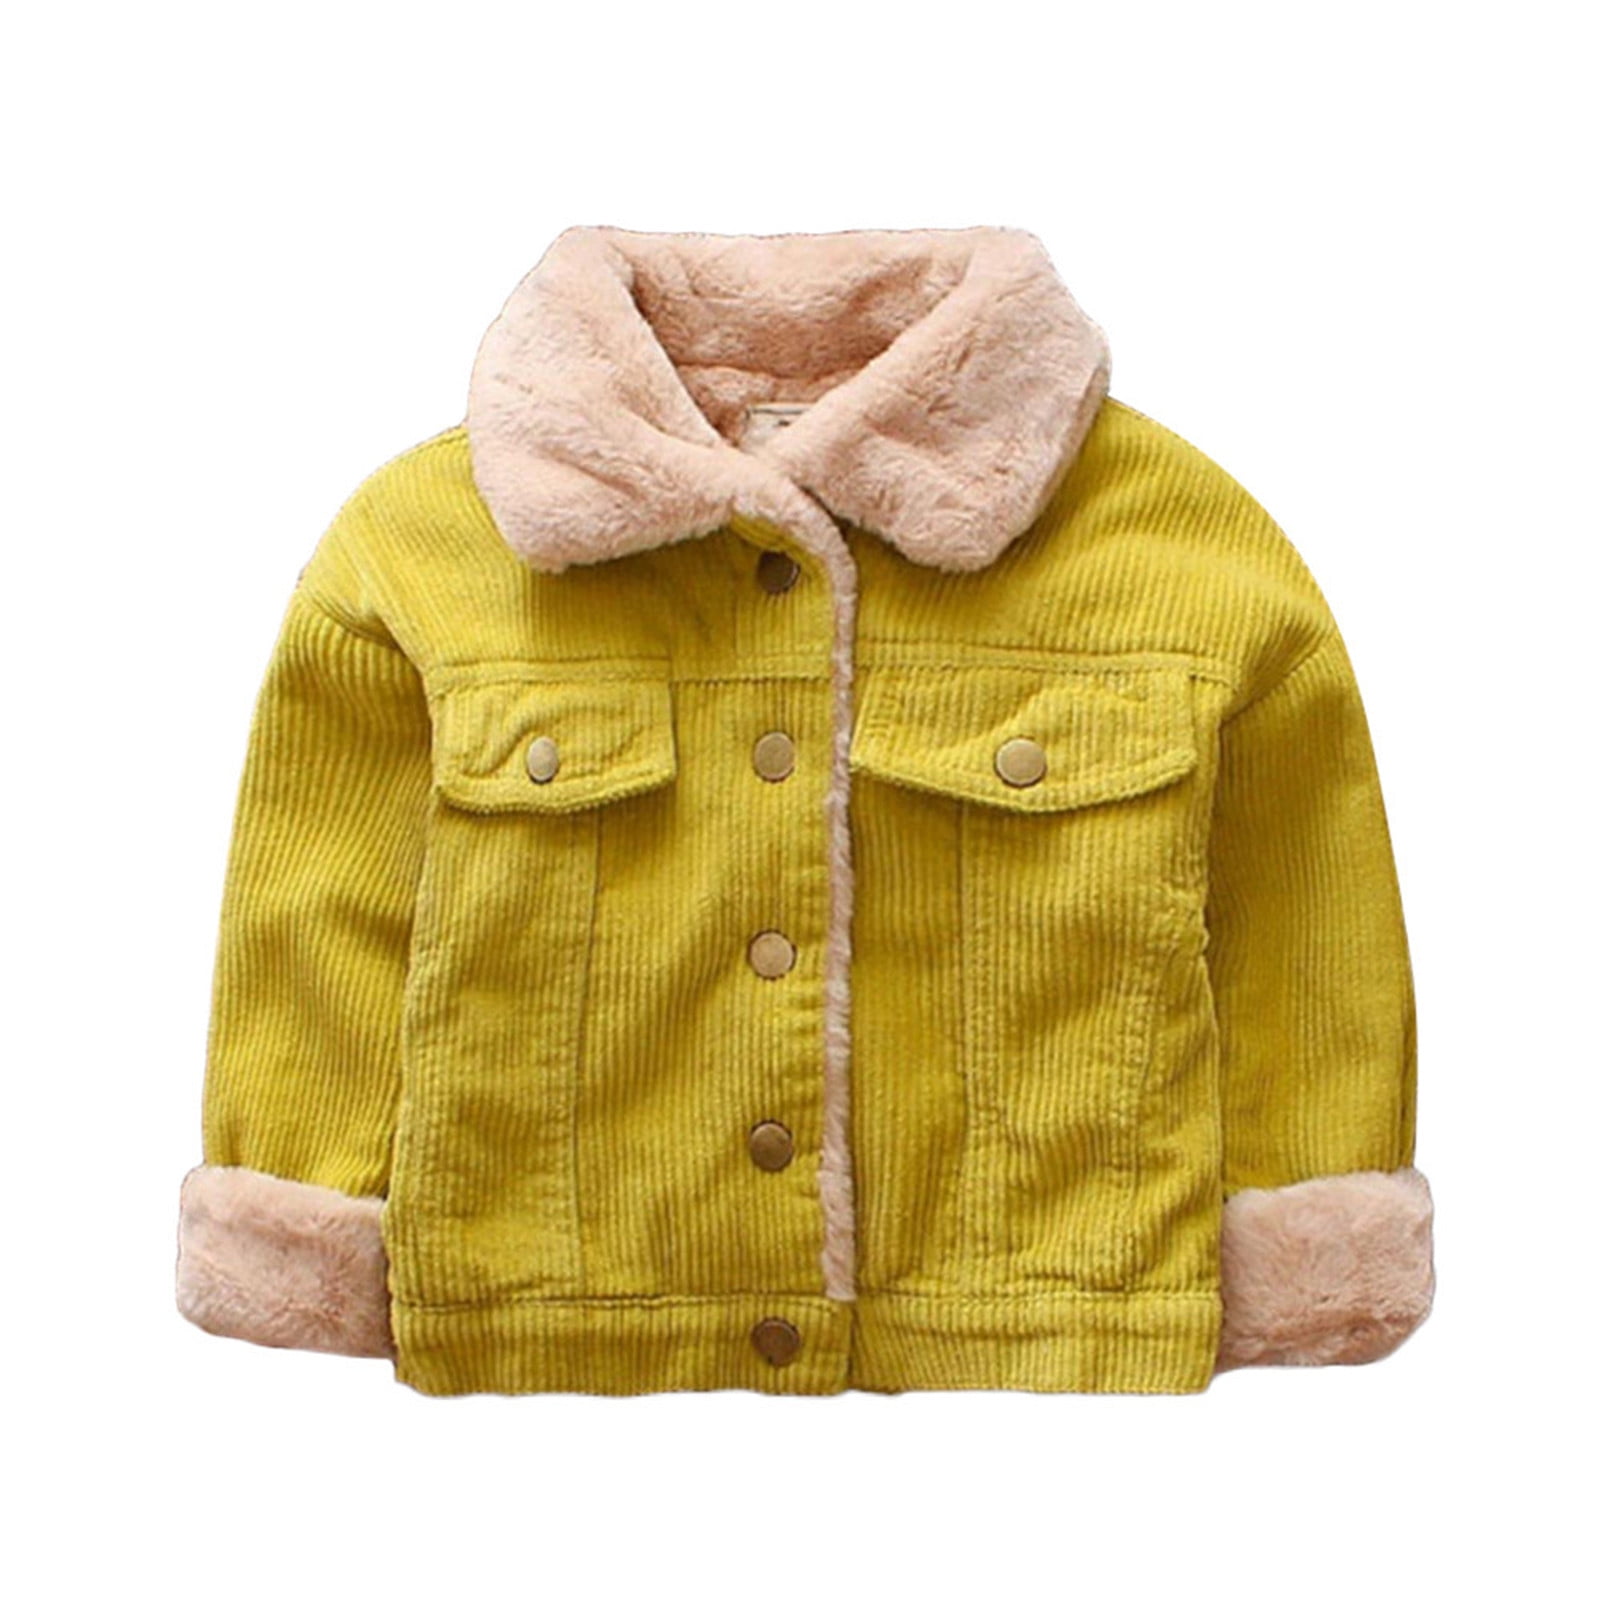 Solid Warm Jacket Coat Thick Baby Kids Winter Outerwear Girls Cloak ...